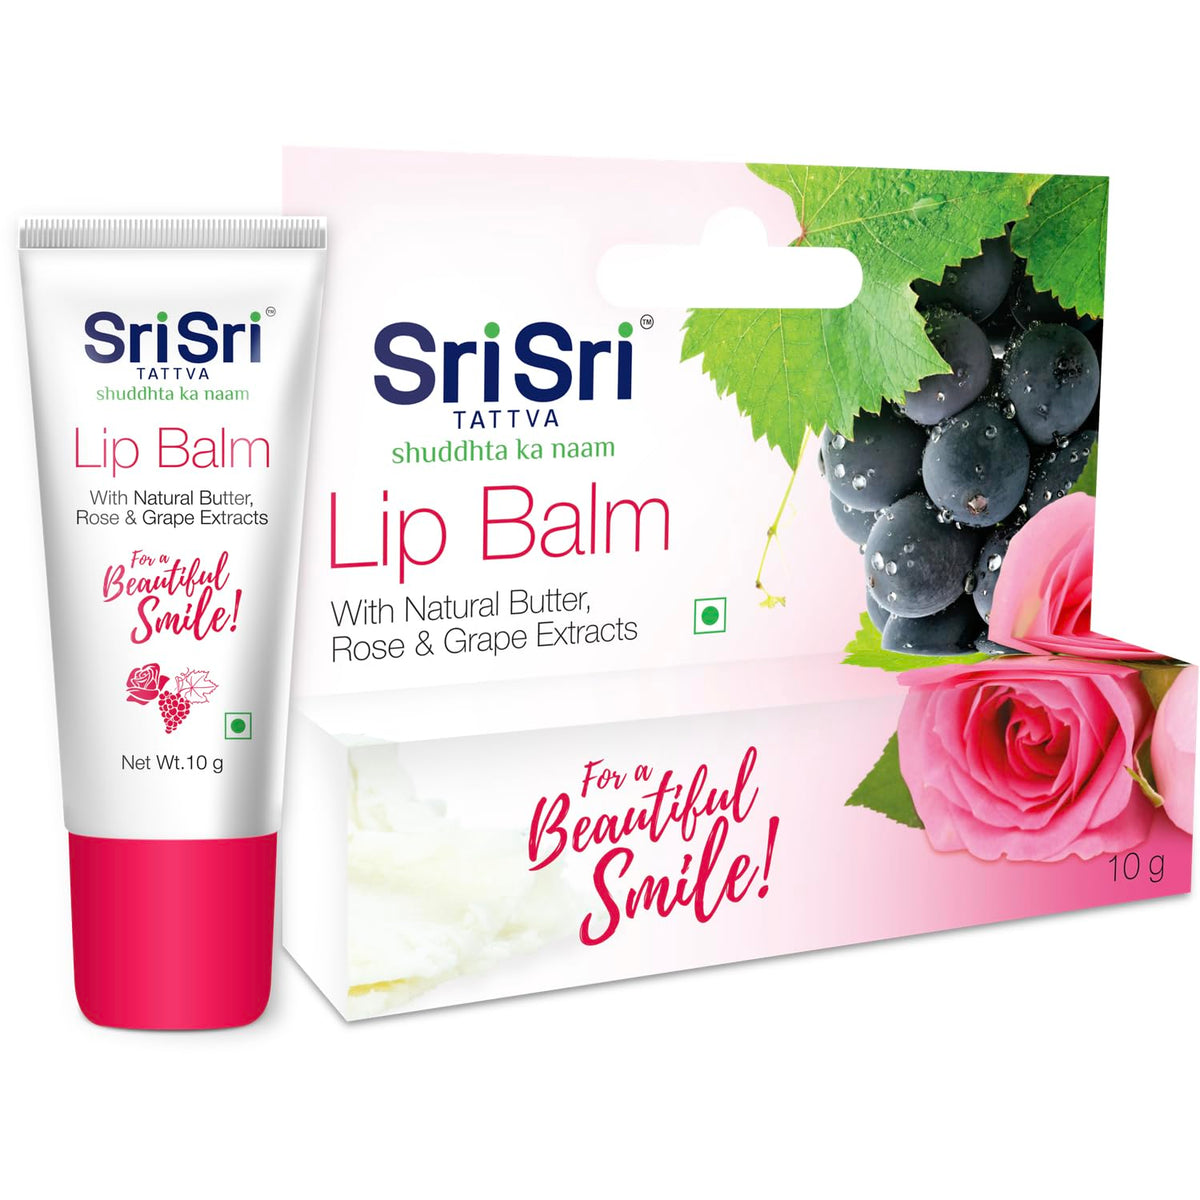 Sri Sri Tattva Ayurvedic Lip With Natural Butter,Rose & Grape Extract Balm 10gm